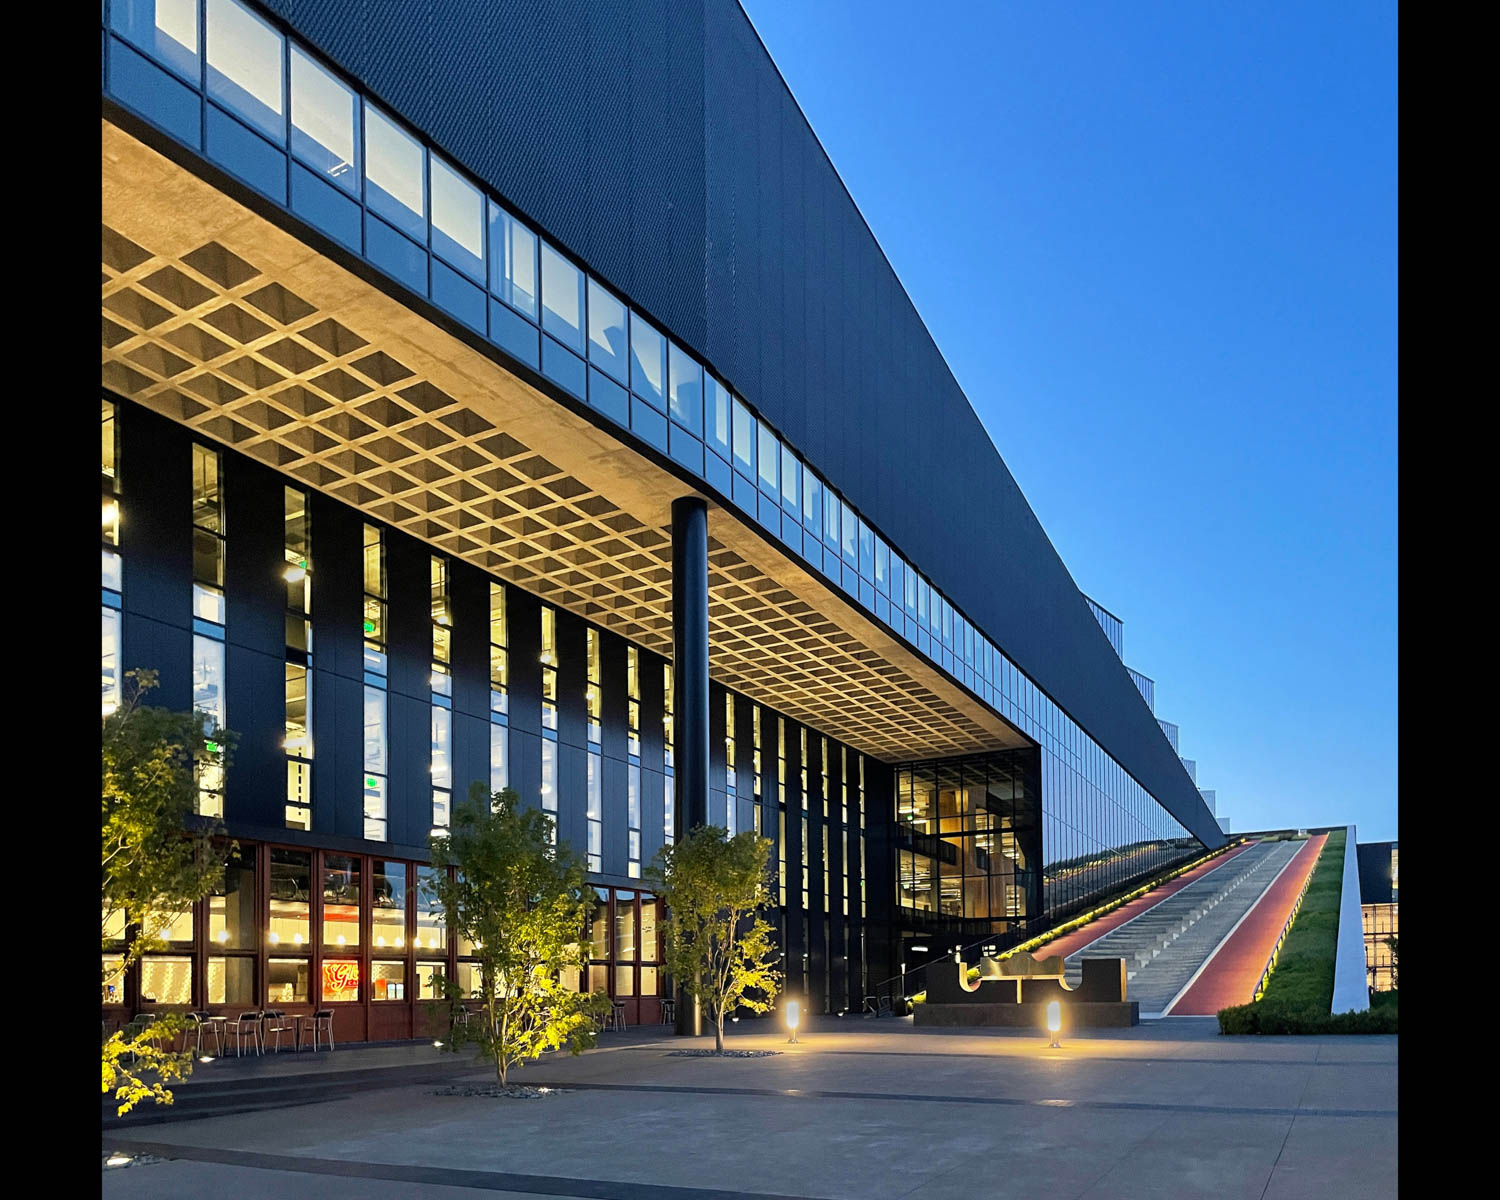 LeBron James Innovation Center, Nike World Headquarters